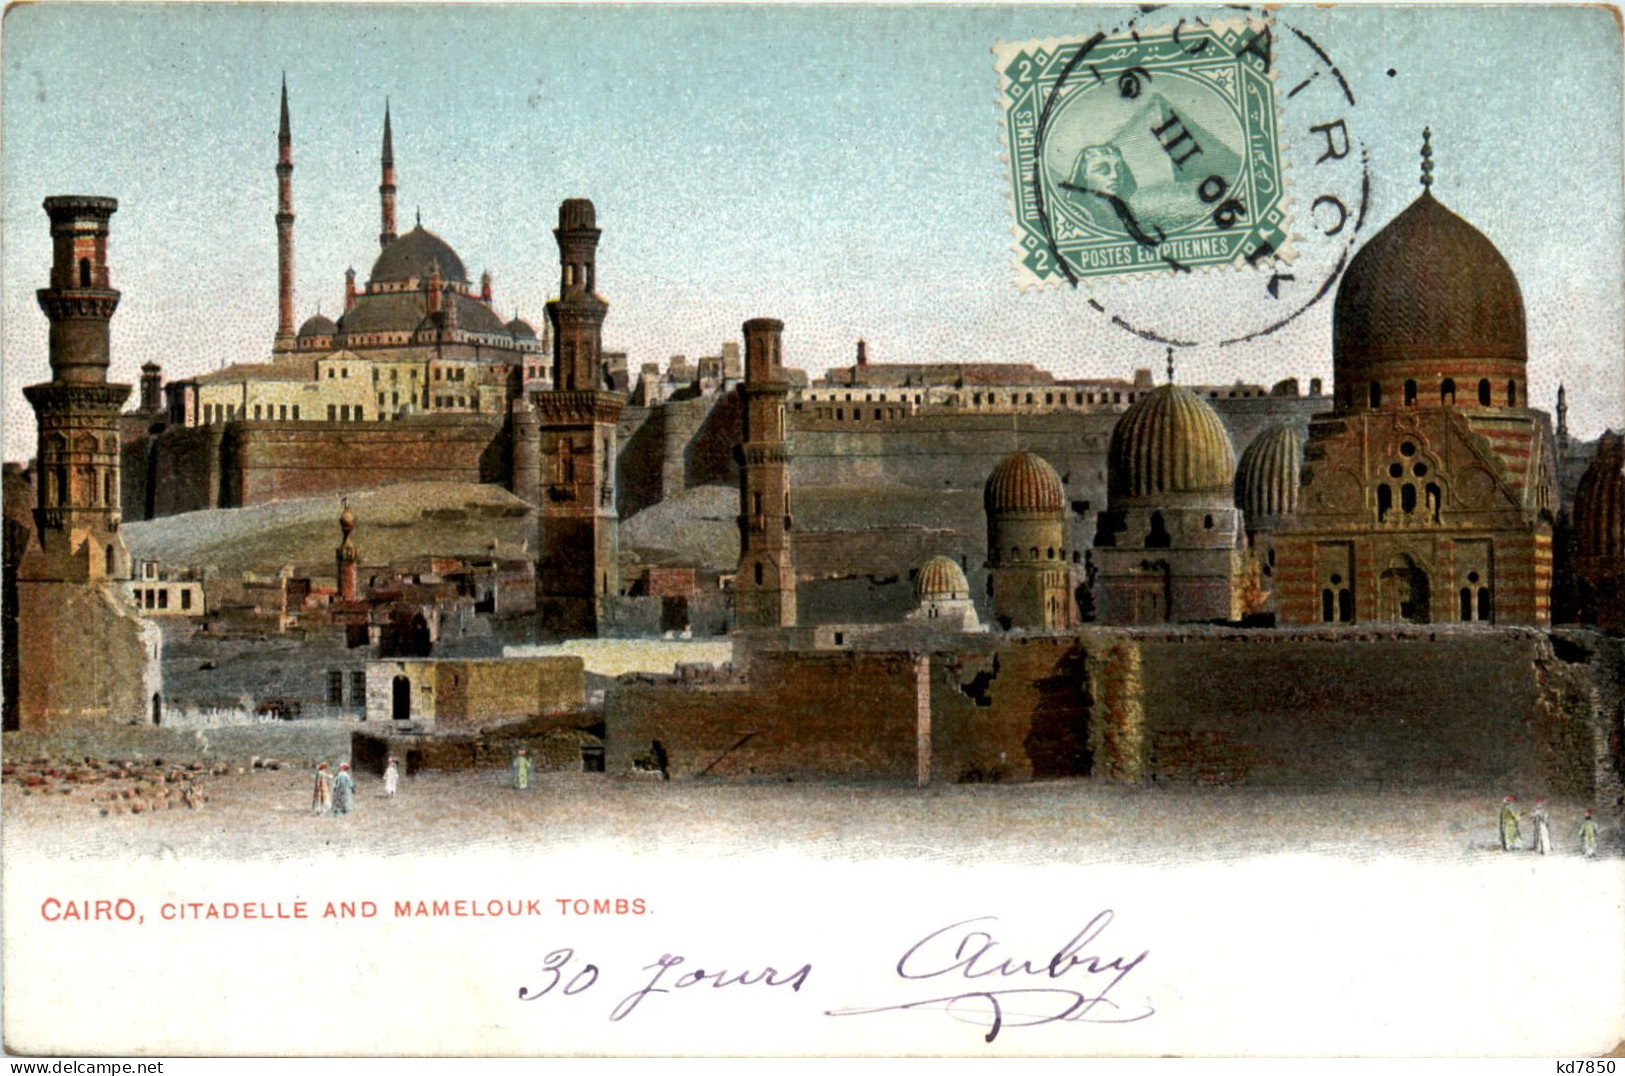 Cairo - Citadelle - Cairo